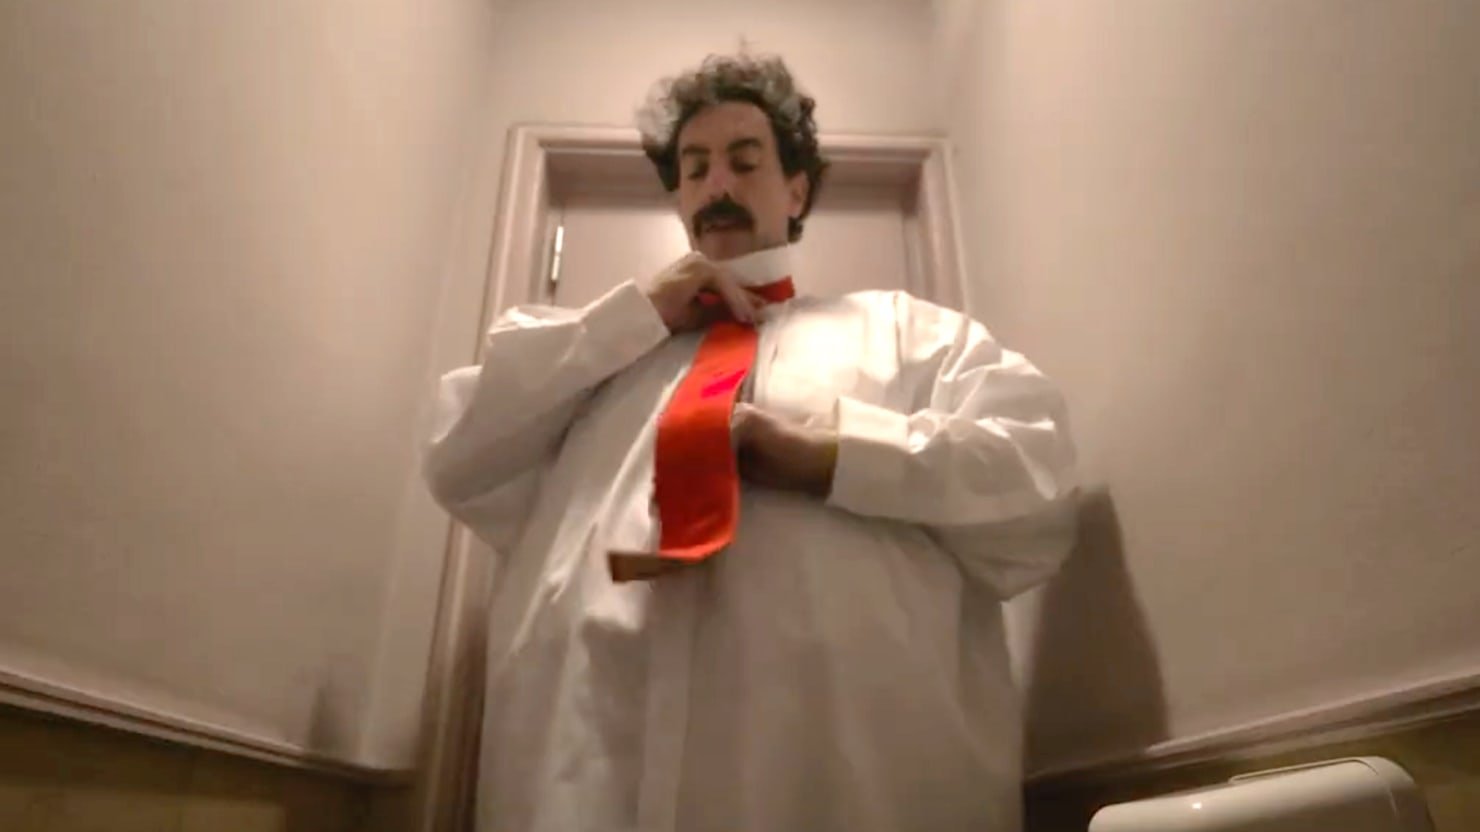 Sacha Baron Cohen Pranks Mike Pence as Trump in ‘Borat 2’ Trailer